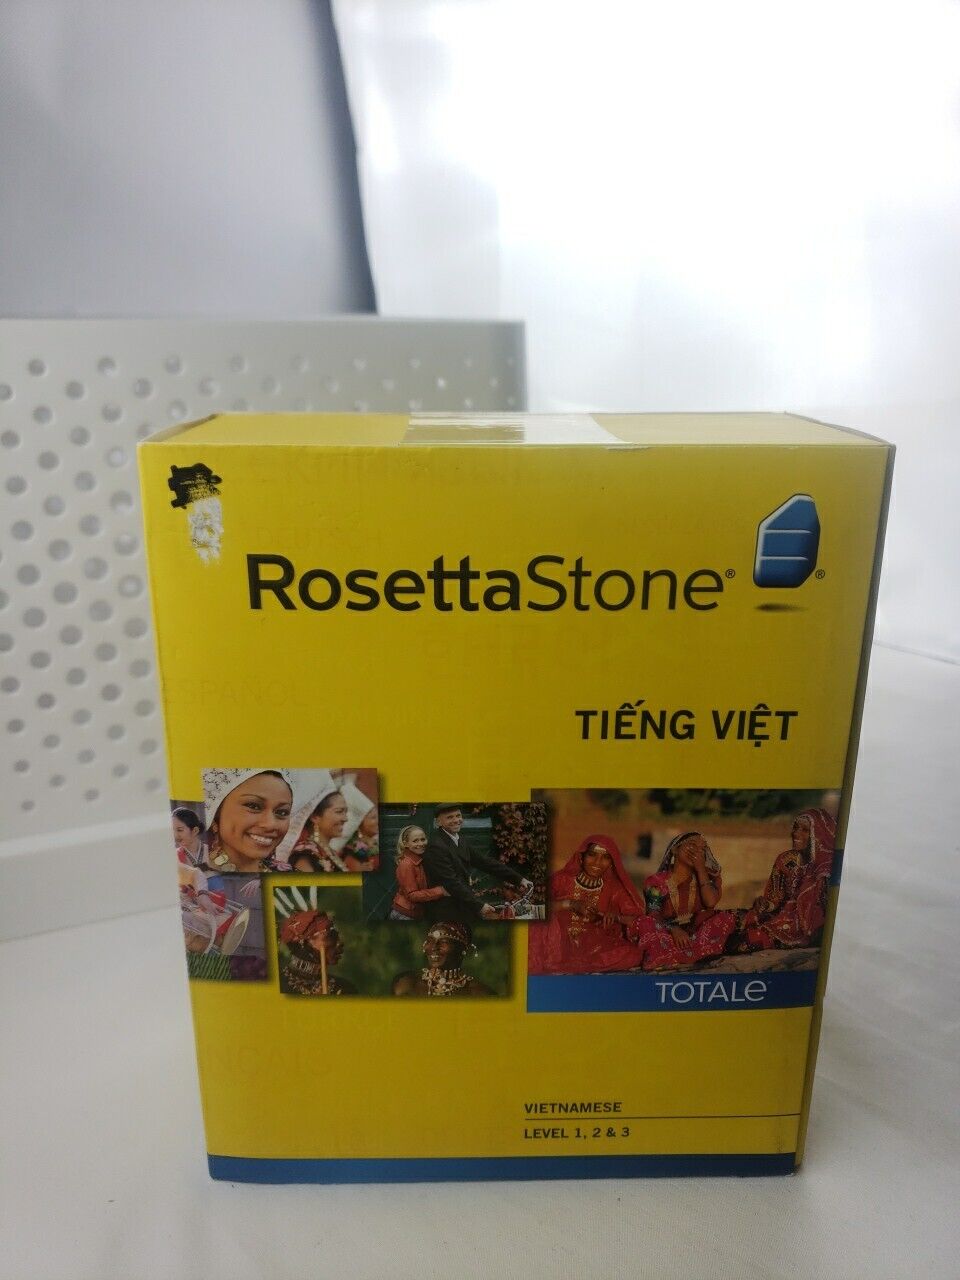 Rosetta Stone: Vietnamese Totale -Level 1,2,3- Version 4, Tieng Viet New Rare